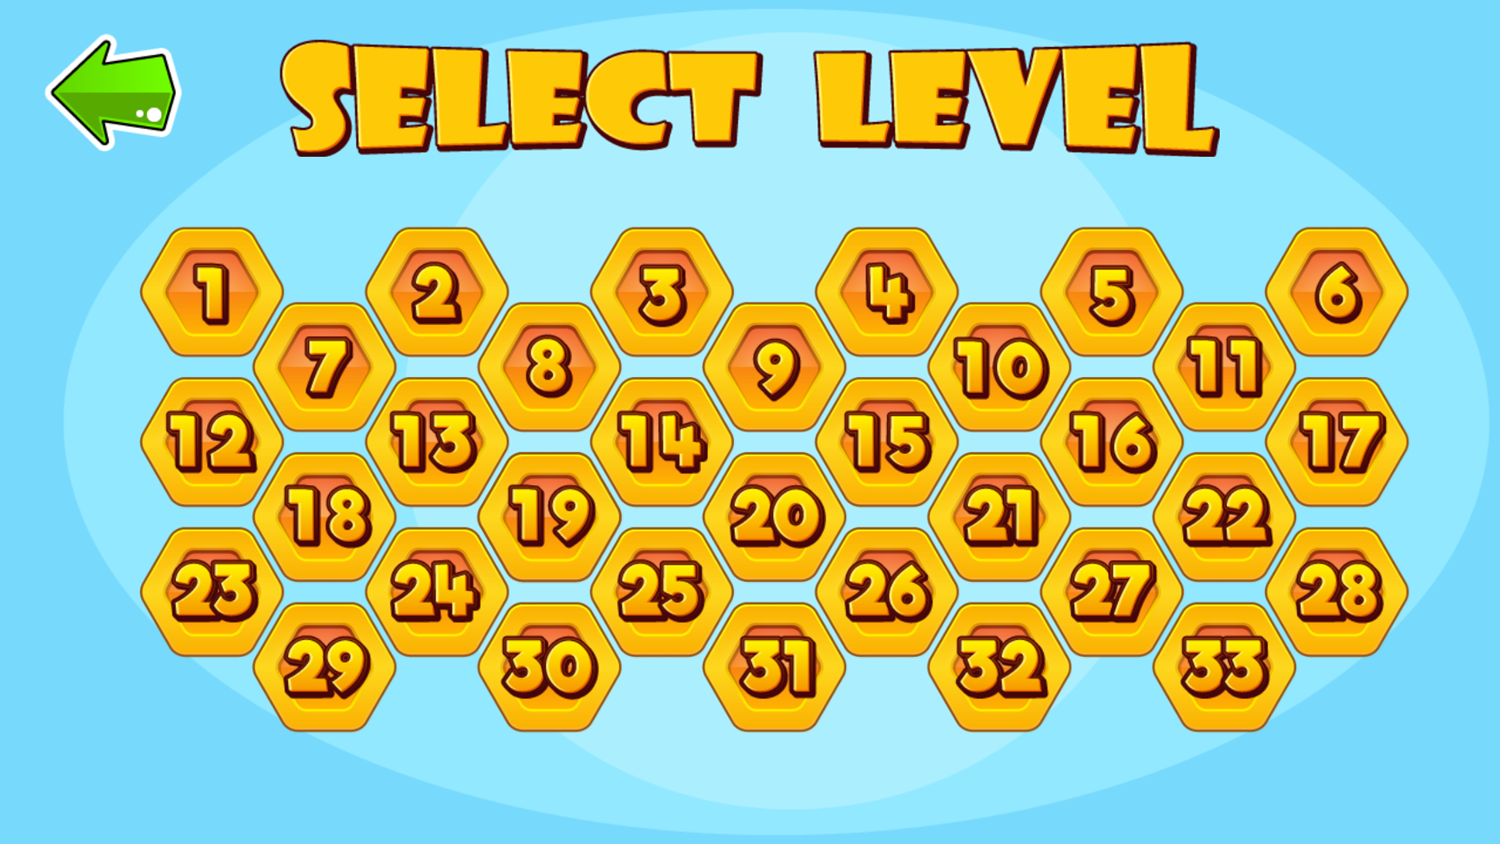 Beepio Game Level Select Screenshot.